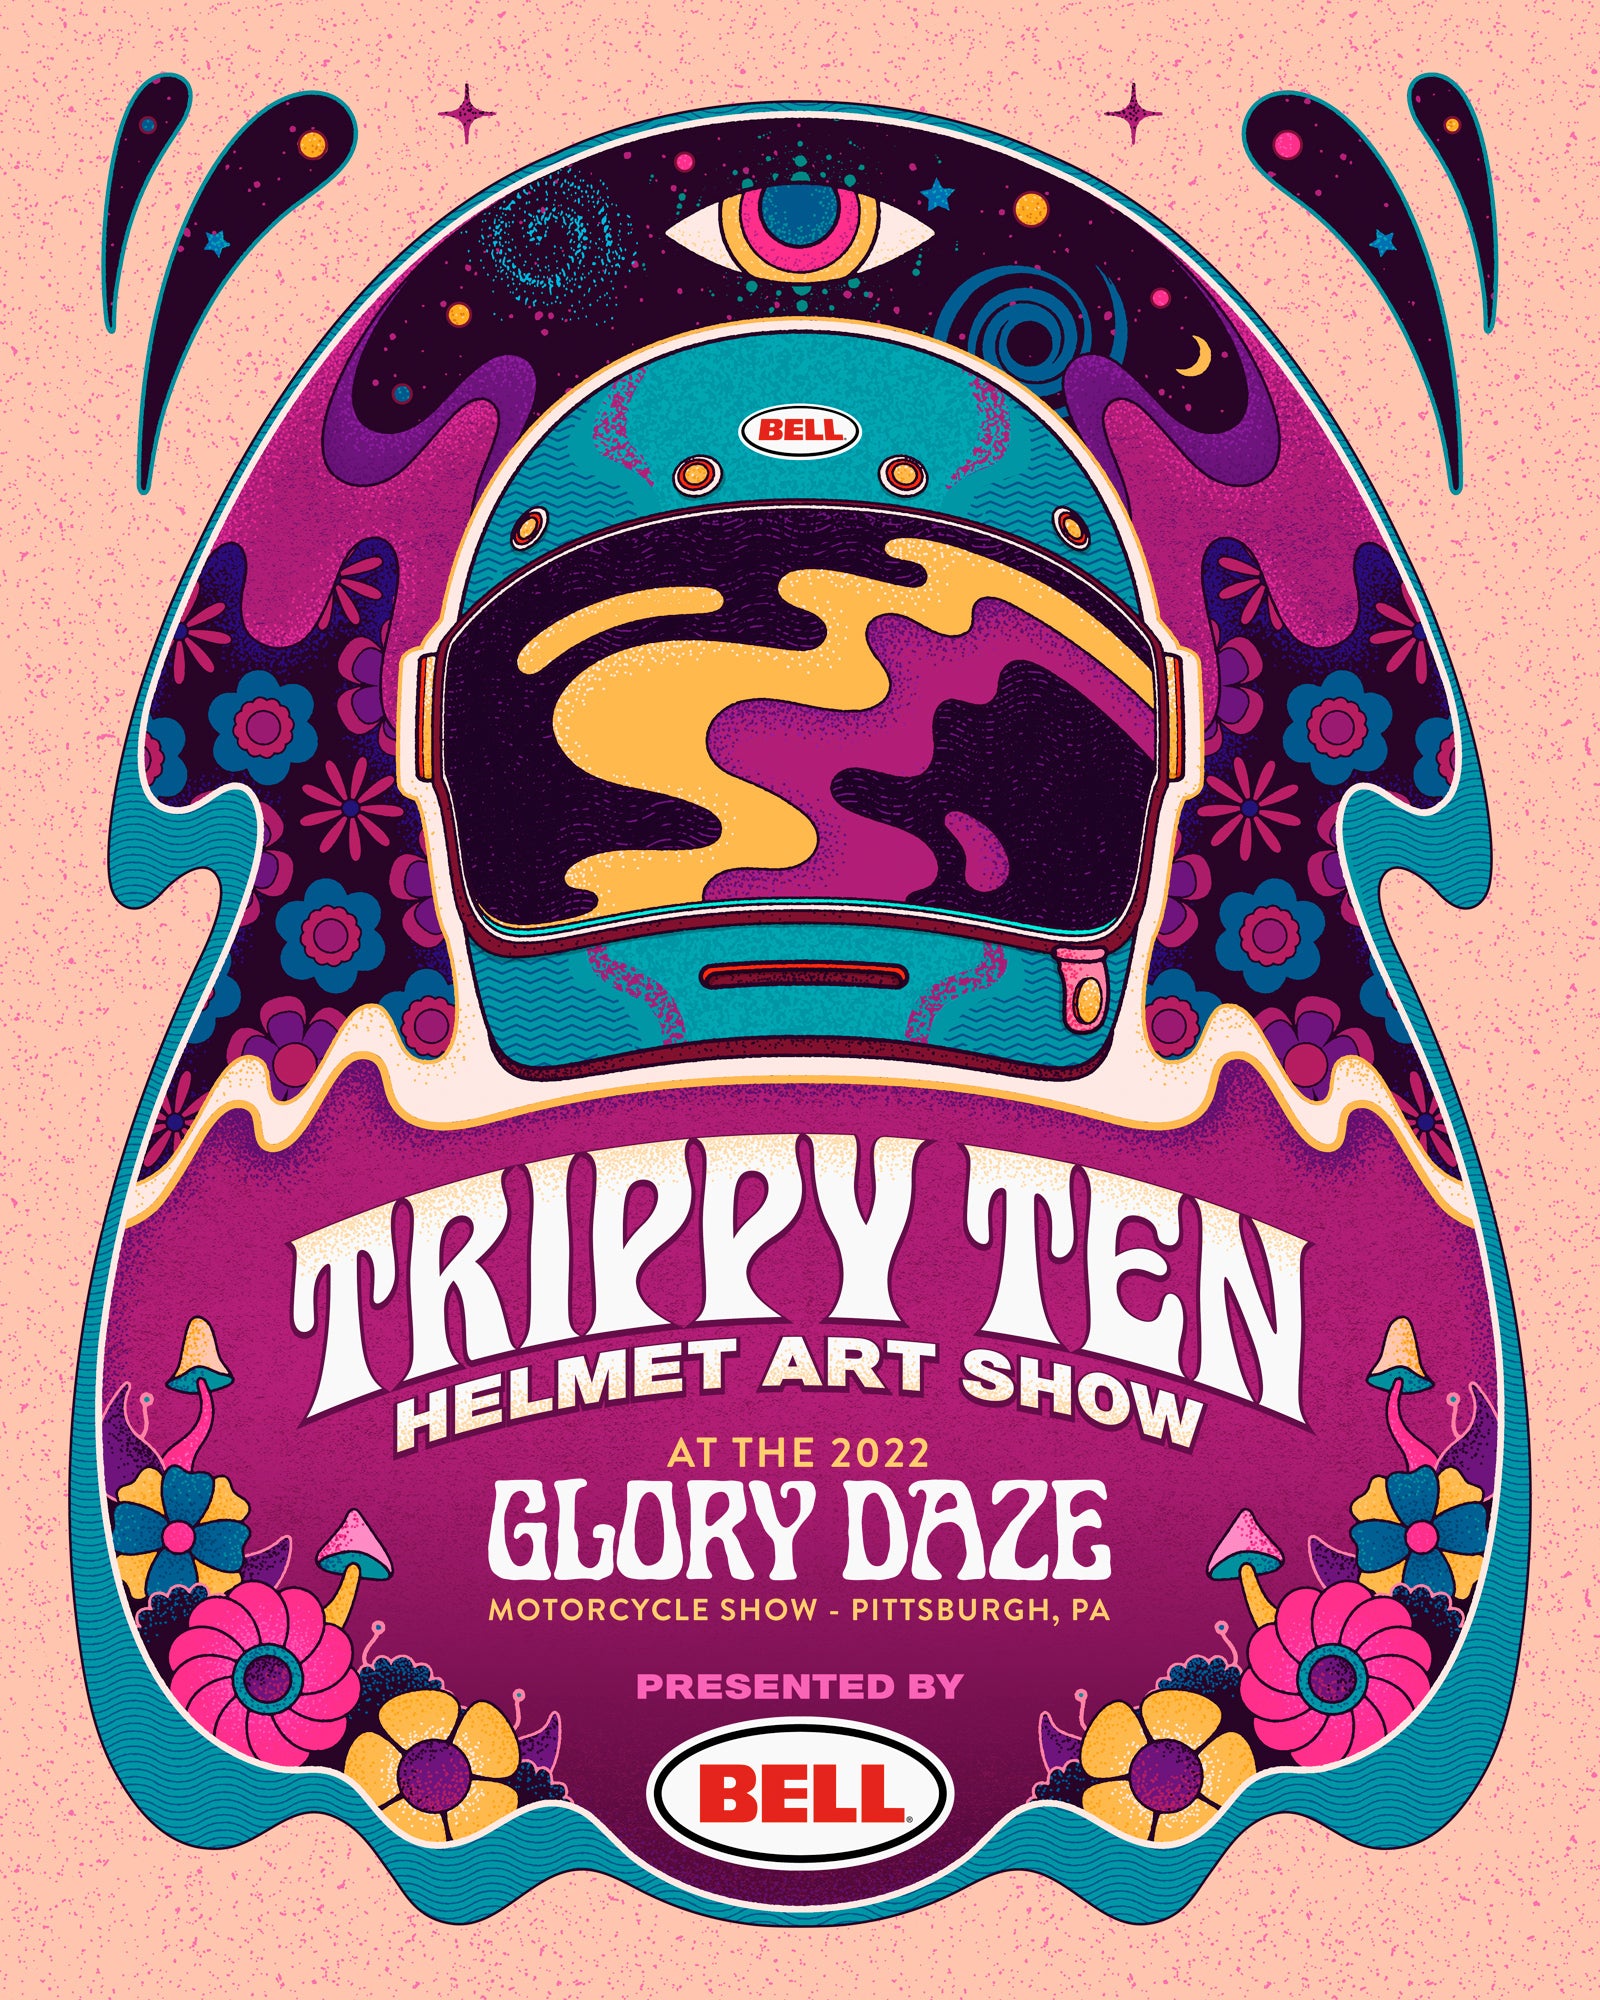 Kurt Diserio artist designer animated illustration poster Glory Daze motorcycle show Trippy Ten helmet pittsburgh event organizer